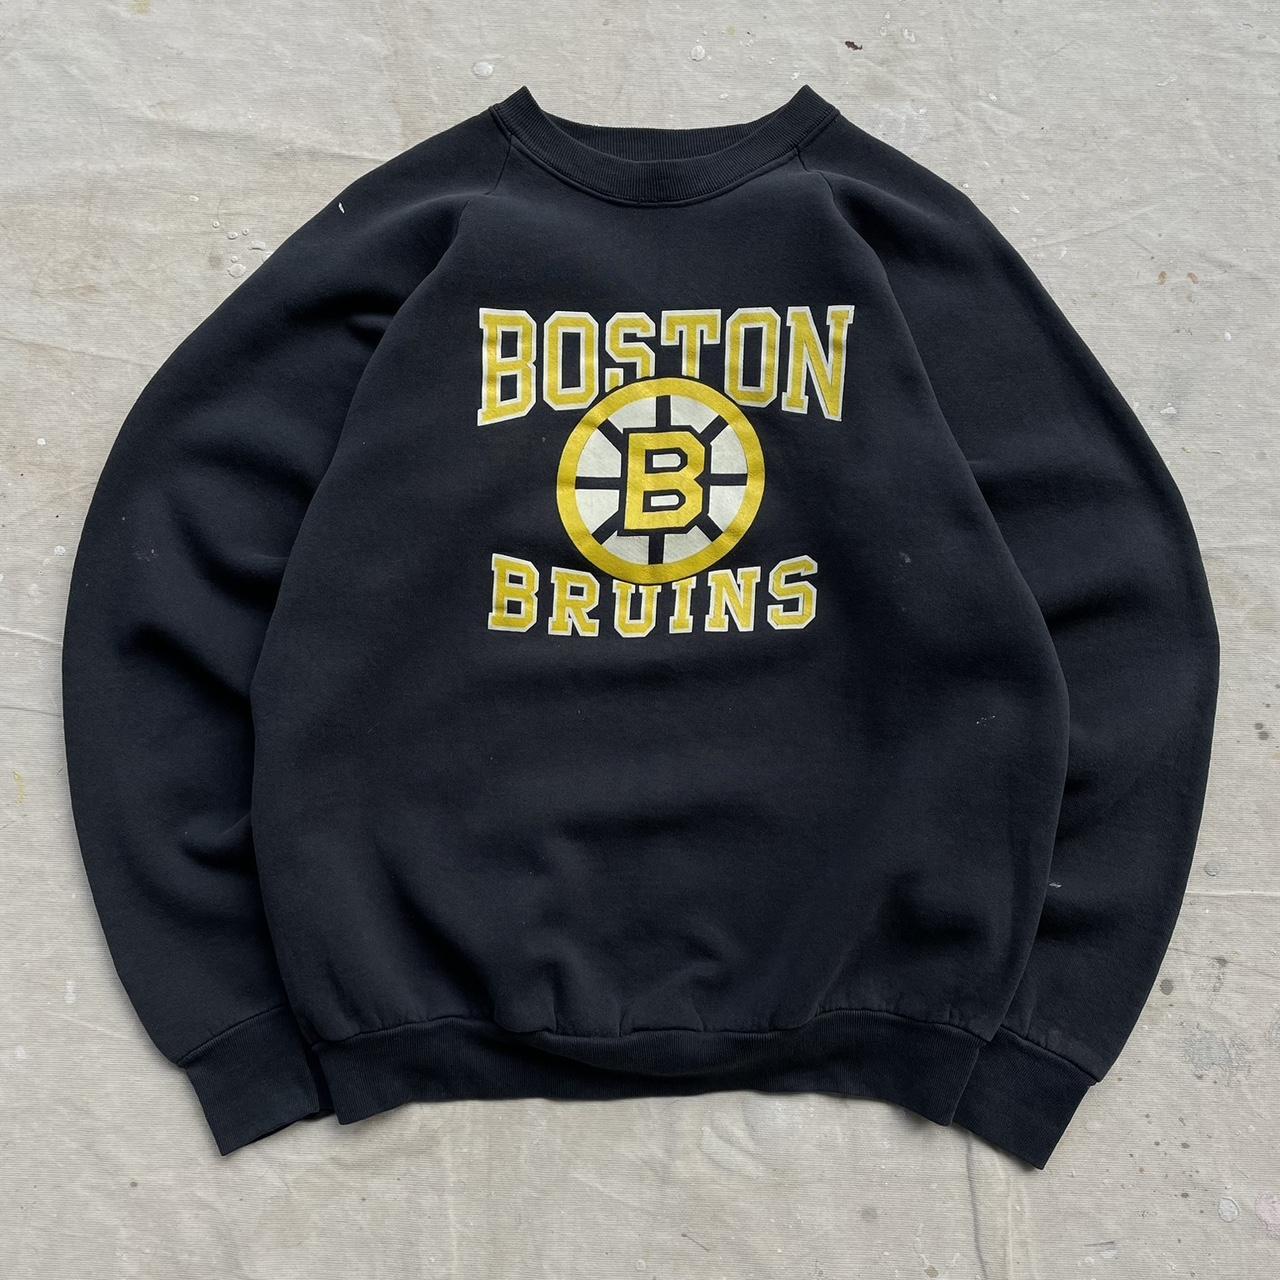 Vintage Boston Bruins Crewneck Made in USA. Great... - Depop